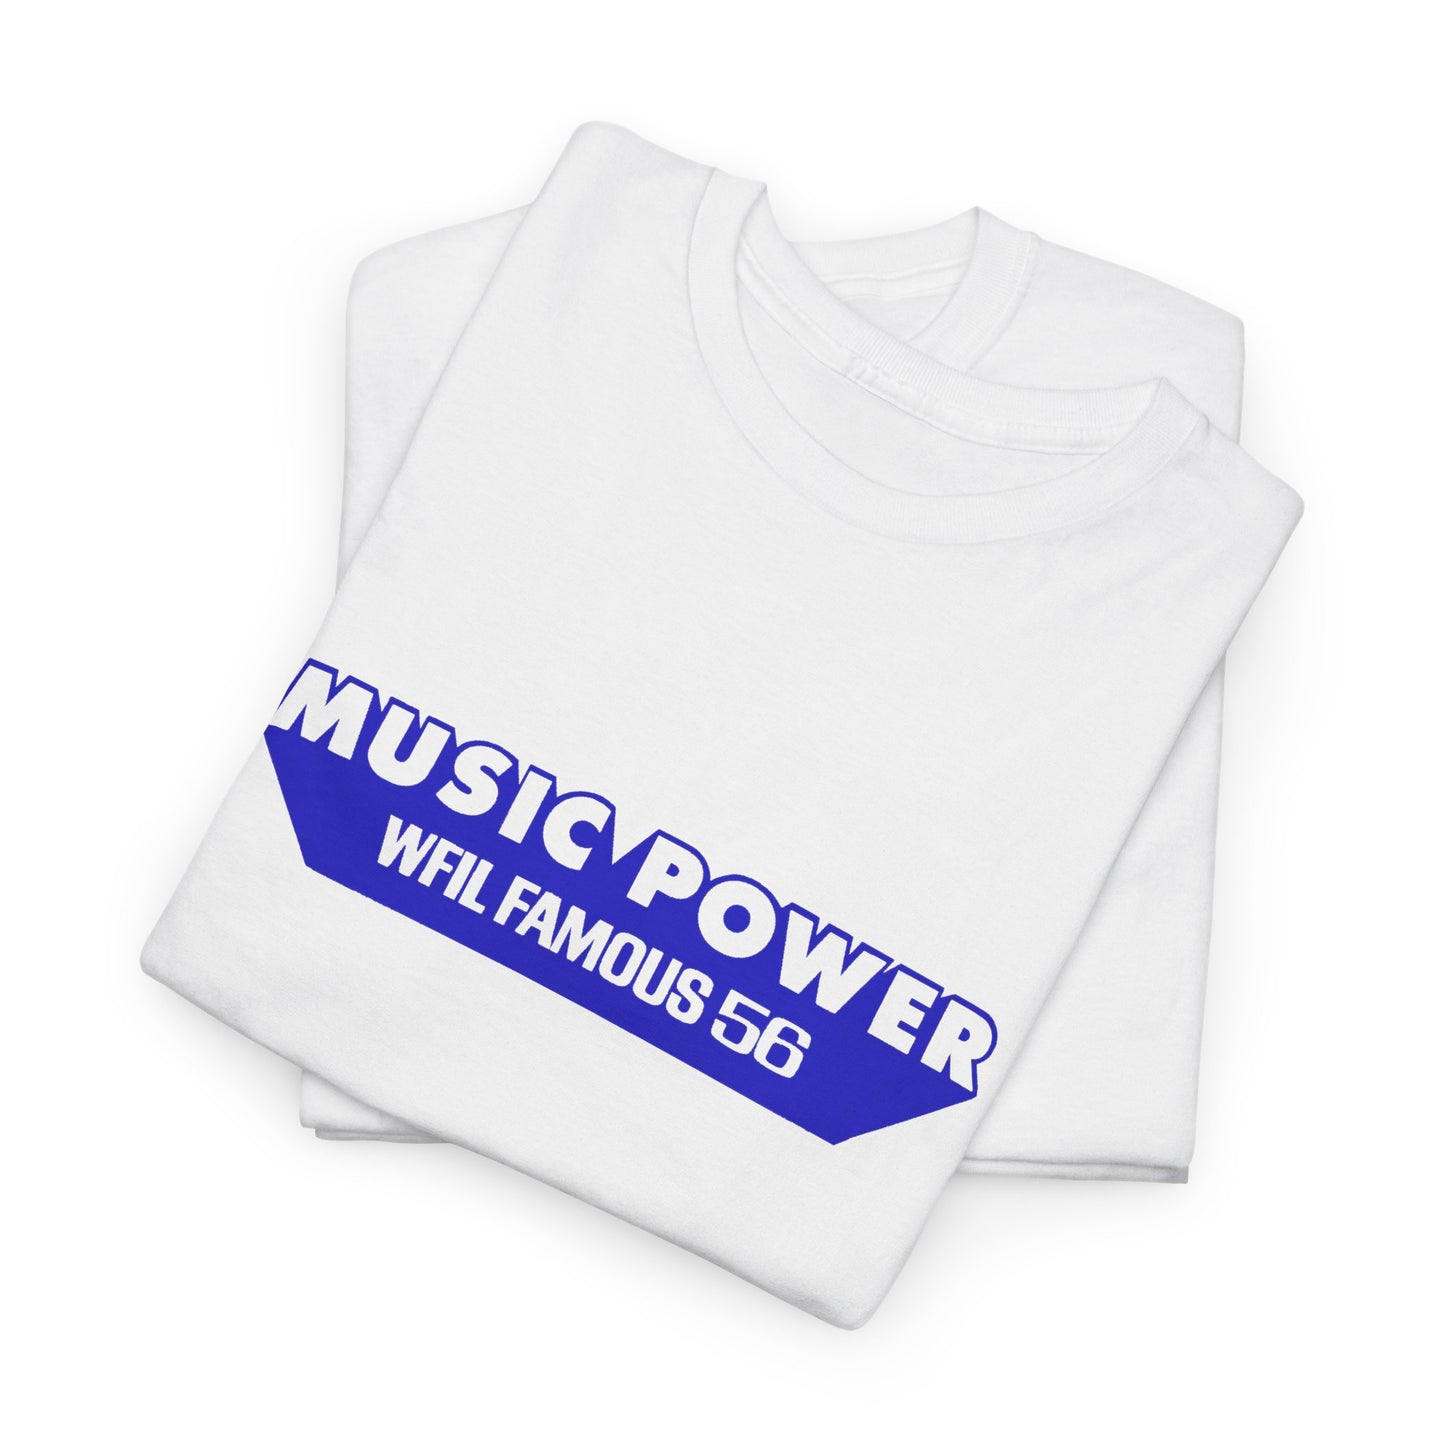 Tee #180: WFIL Radio Music Power